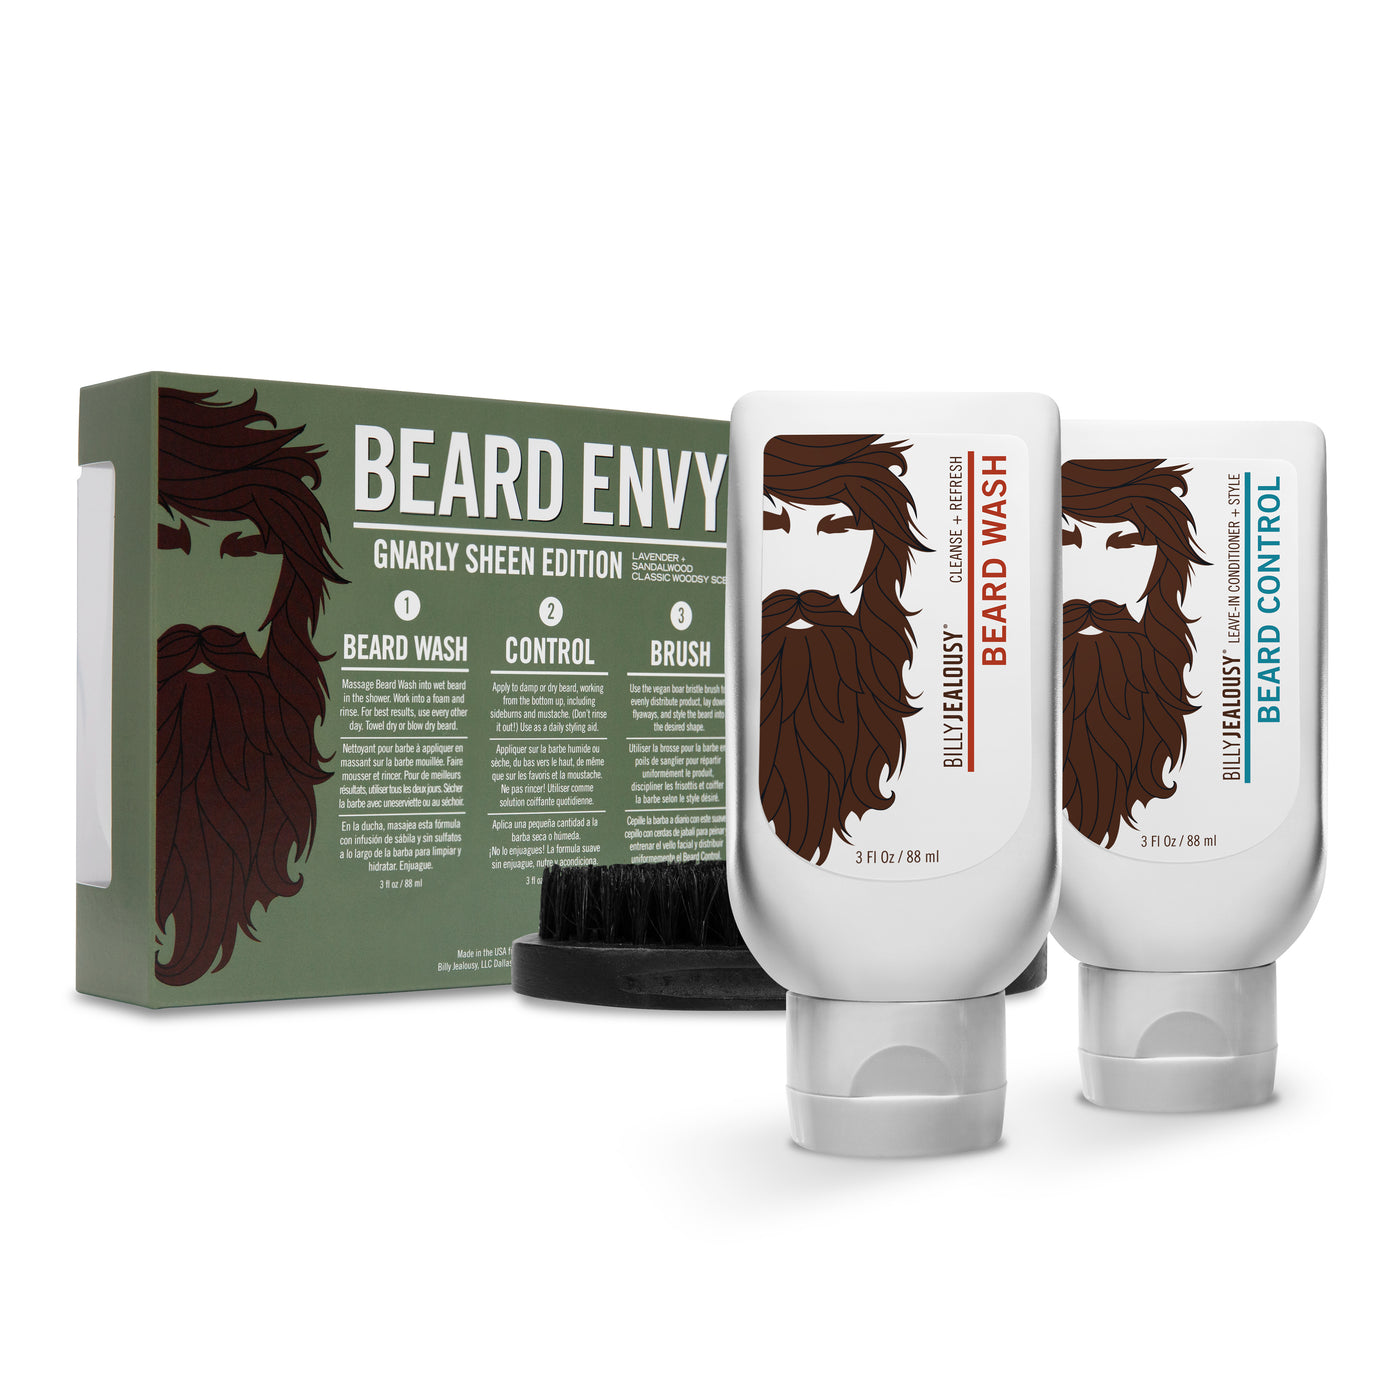 Original Beard Envy Kit - Classic Woodsy Scent